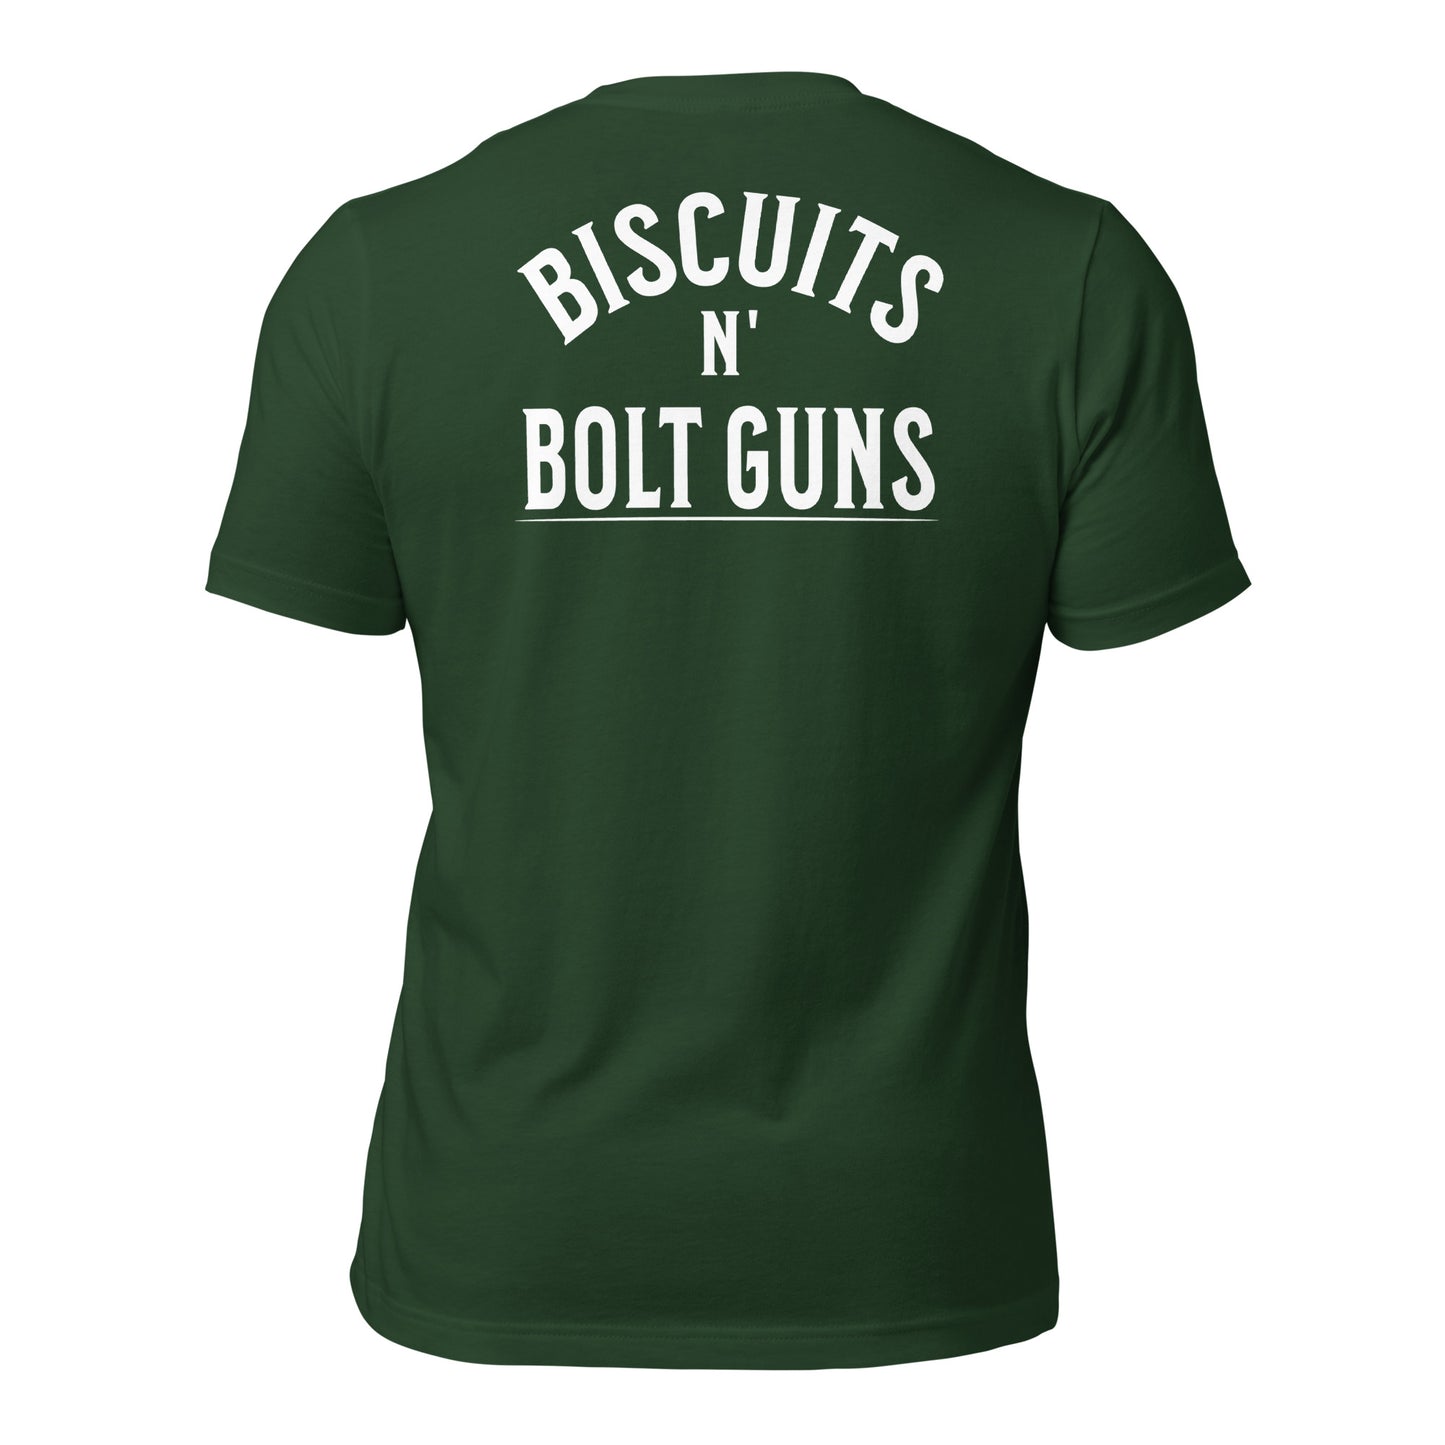 Biscuits N' Bolt Guns.